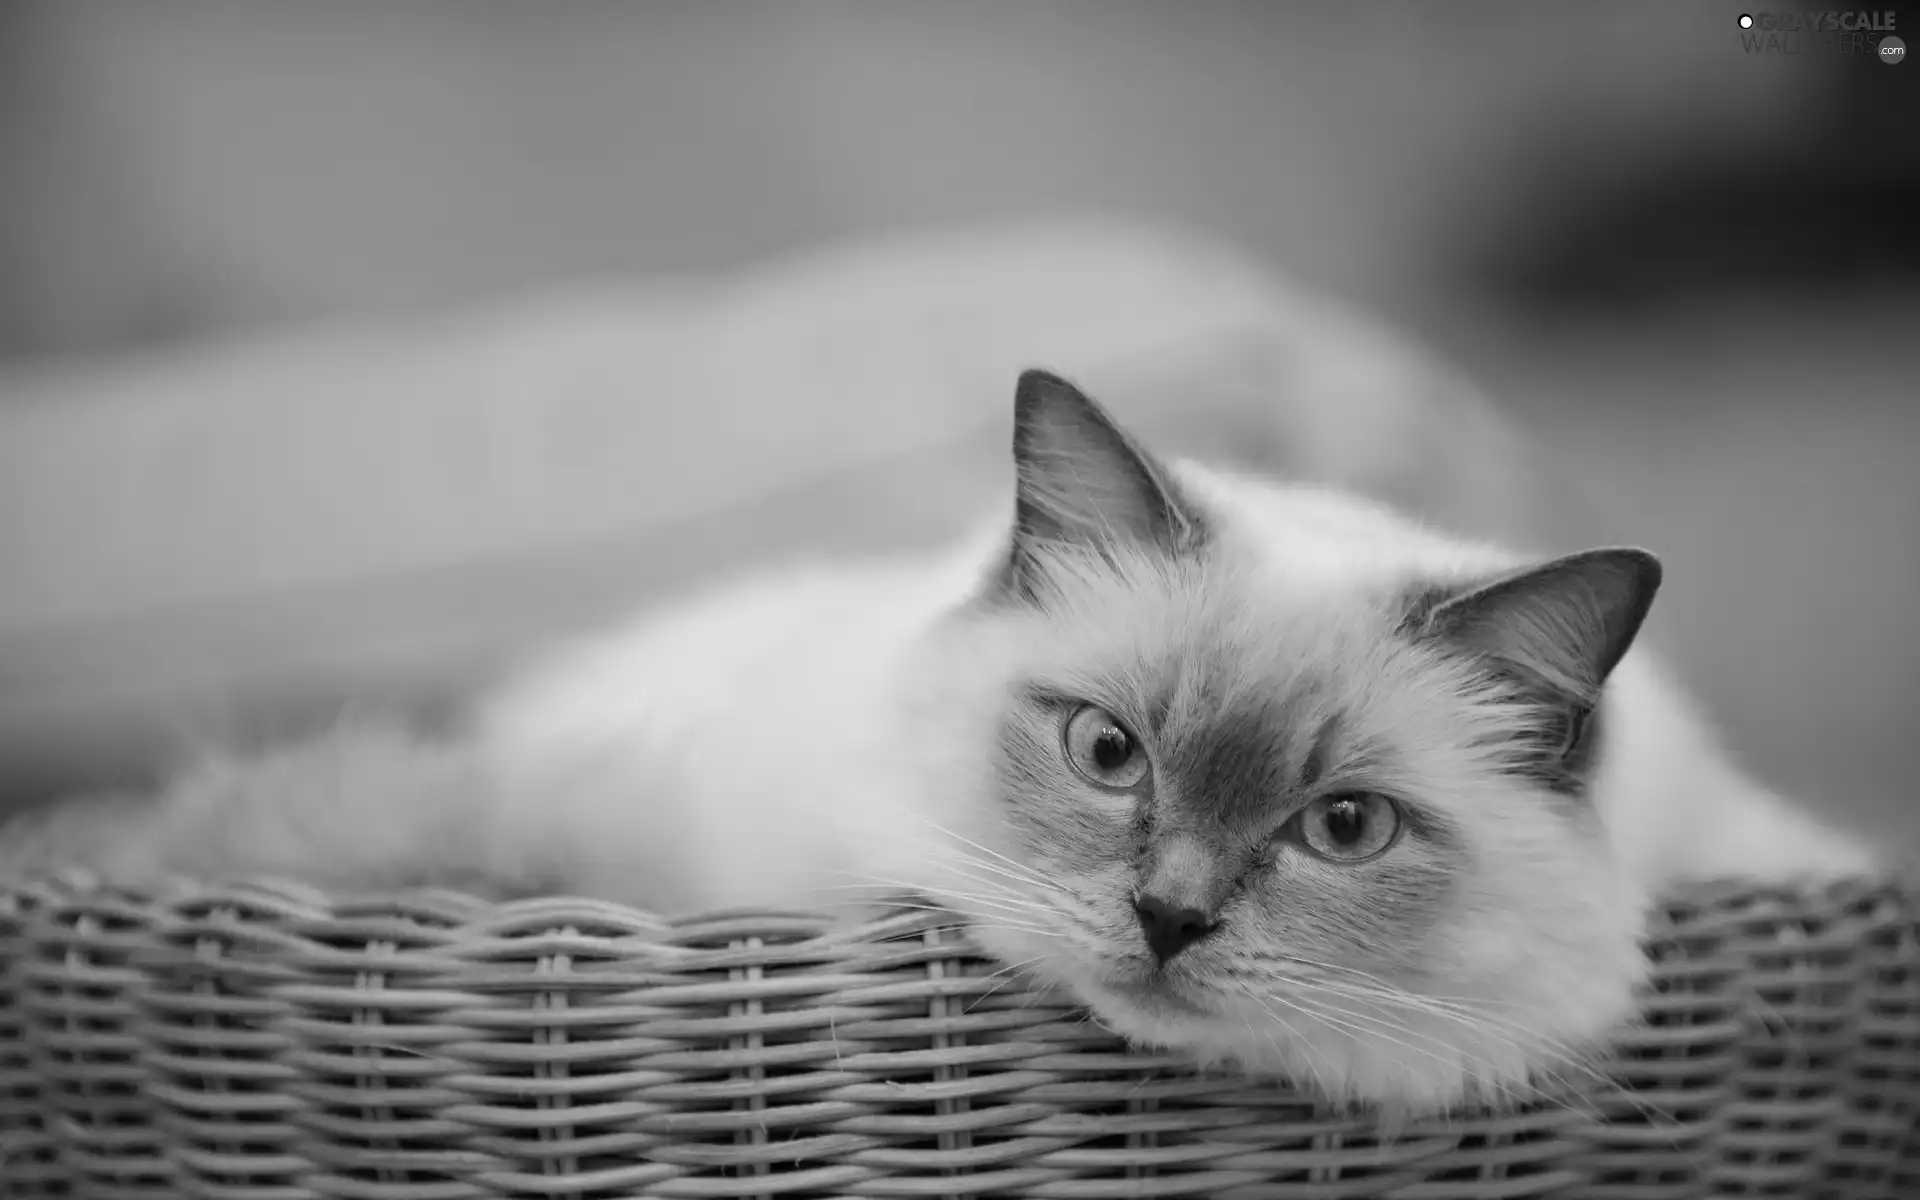 kitten, Eyes, basket, Blue